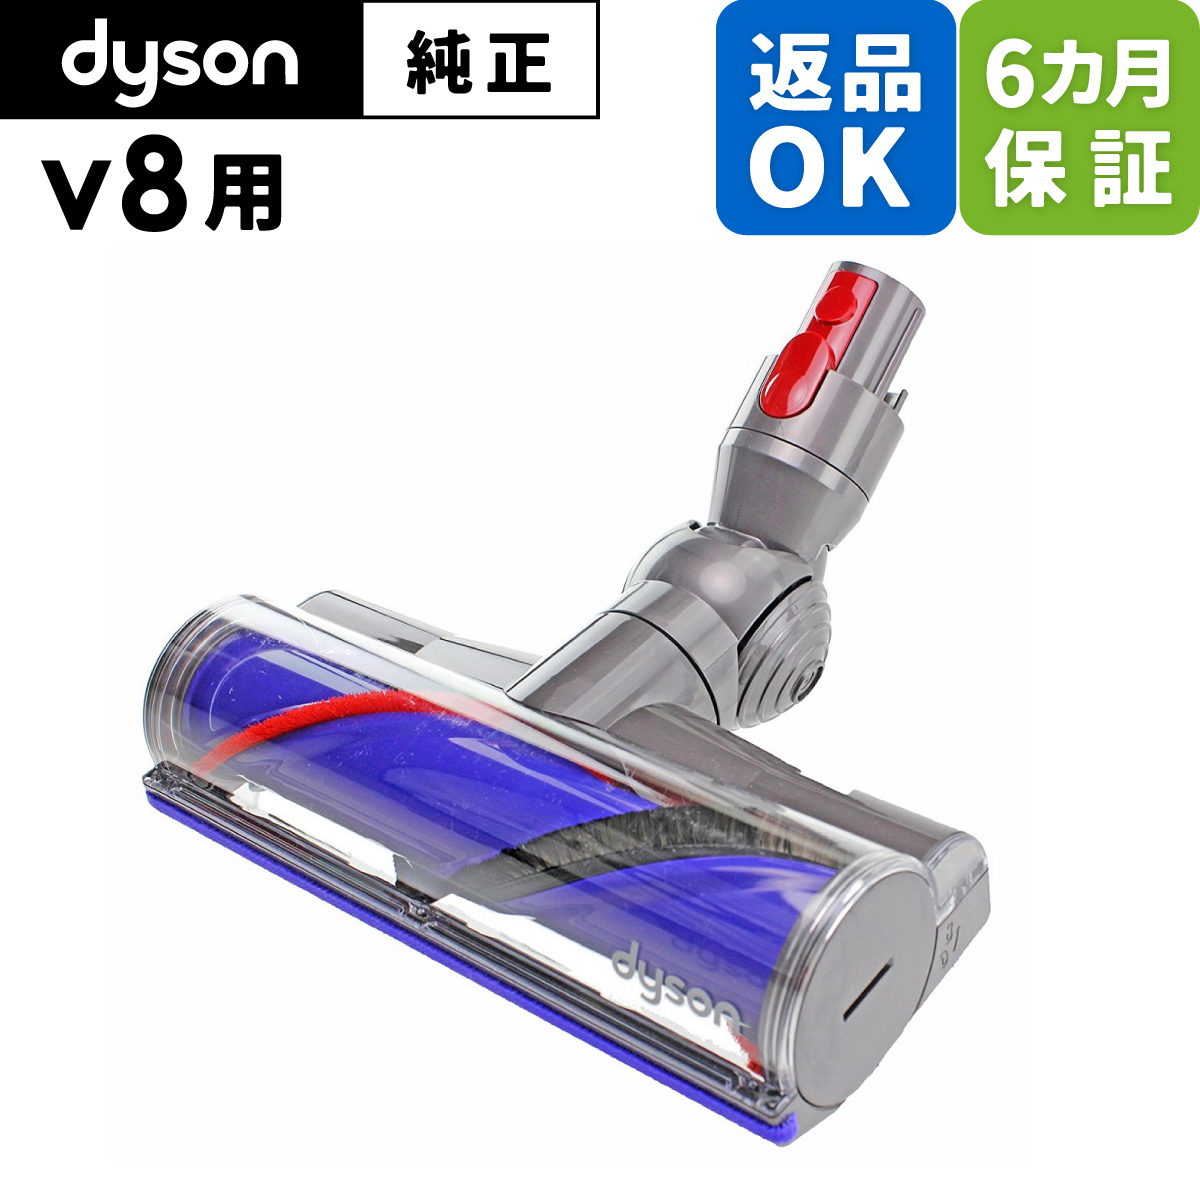 dyson ダイレクトドライブクリーナーヘッド パーツ 掃除機の人気商品 